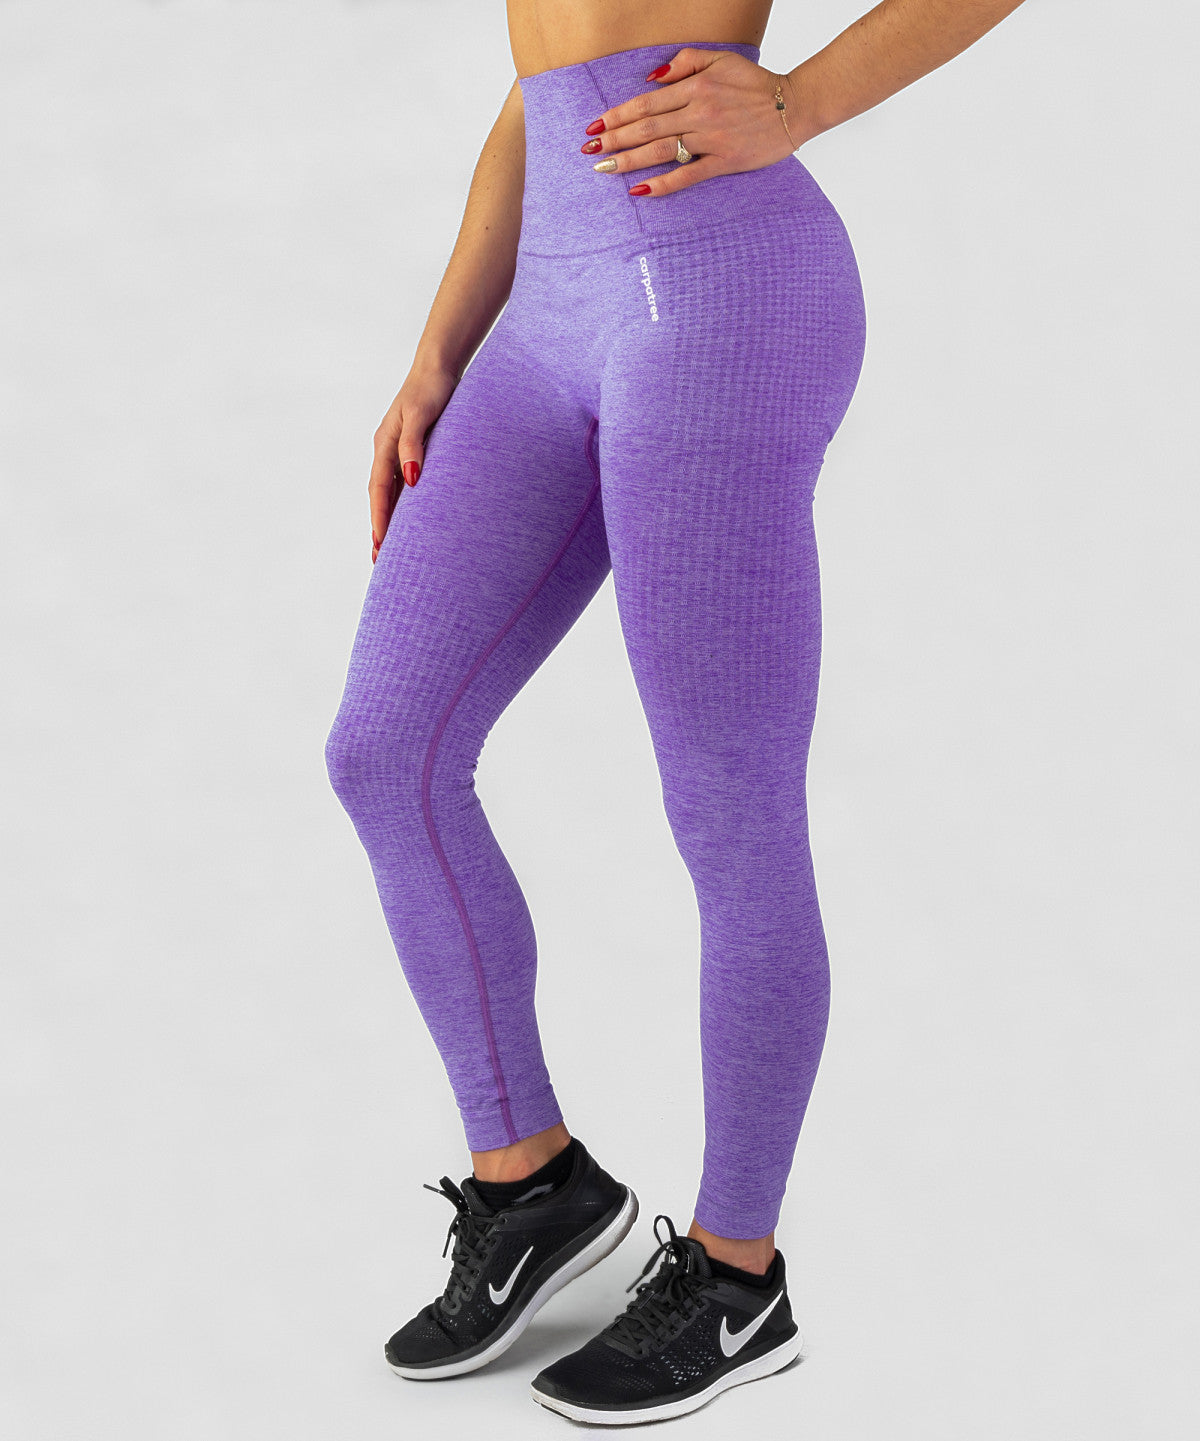 Carpatree Model One Seamless Leggings - purple high waisted activewear sports leggings